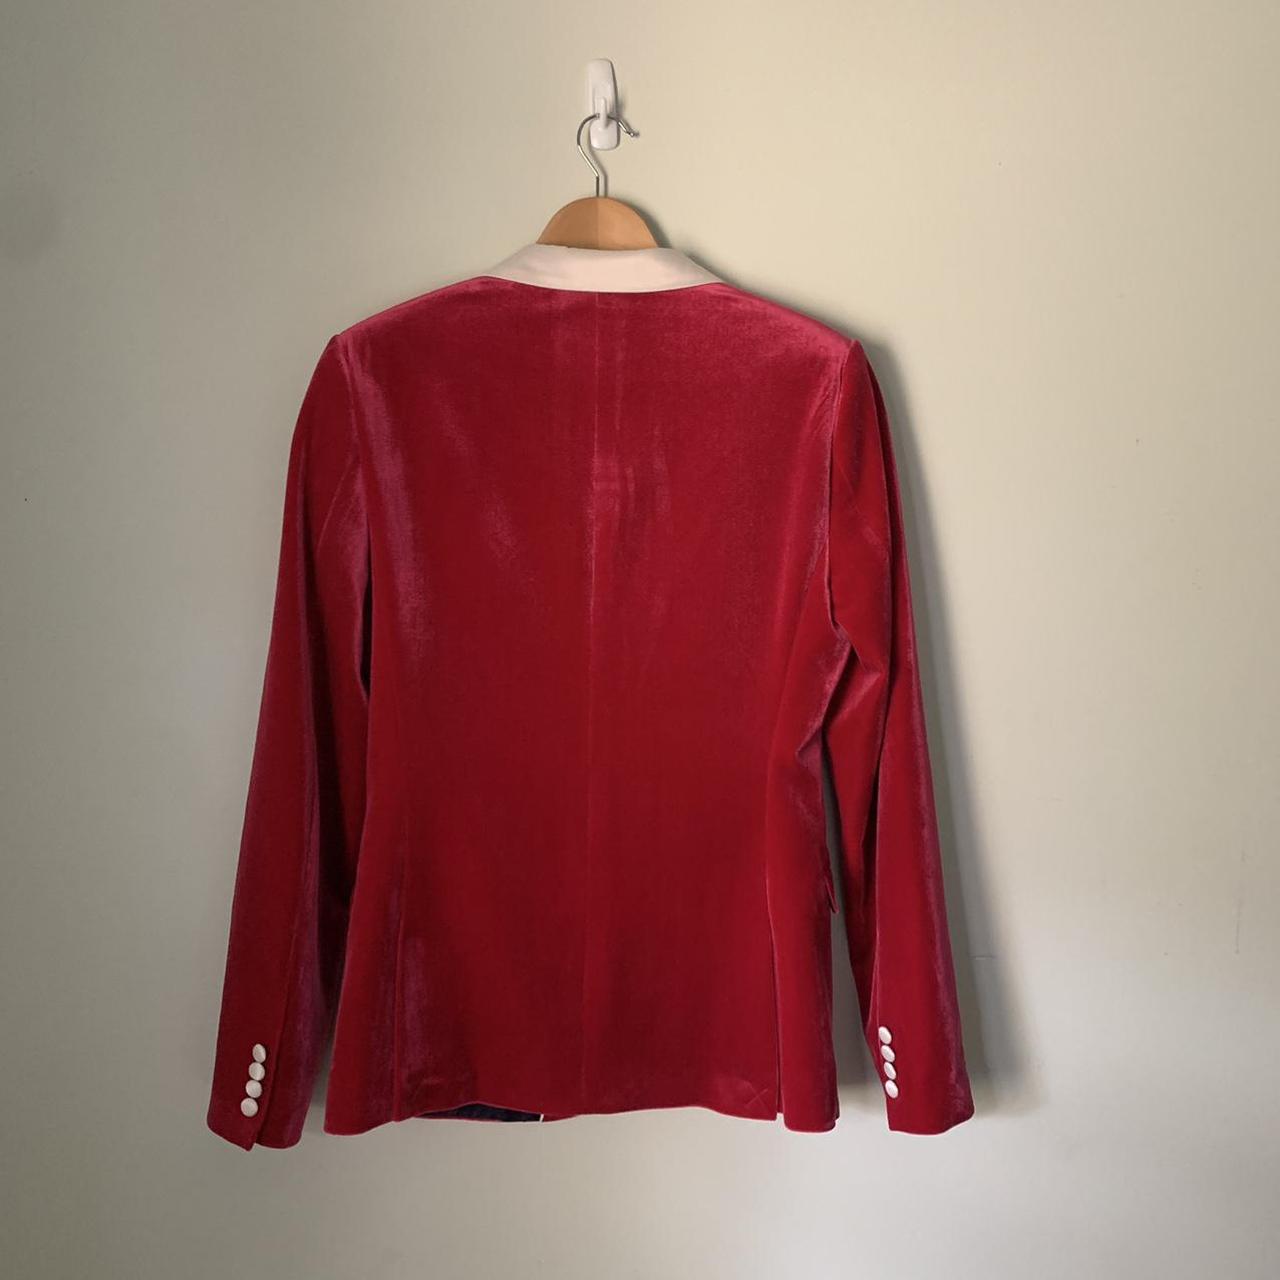 ASOS hot pink Velvet jacket blazer size UK 38